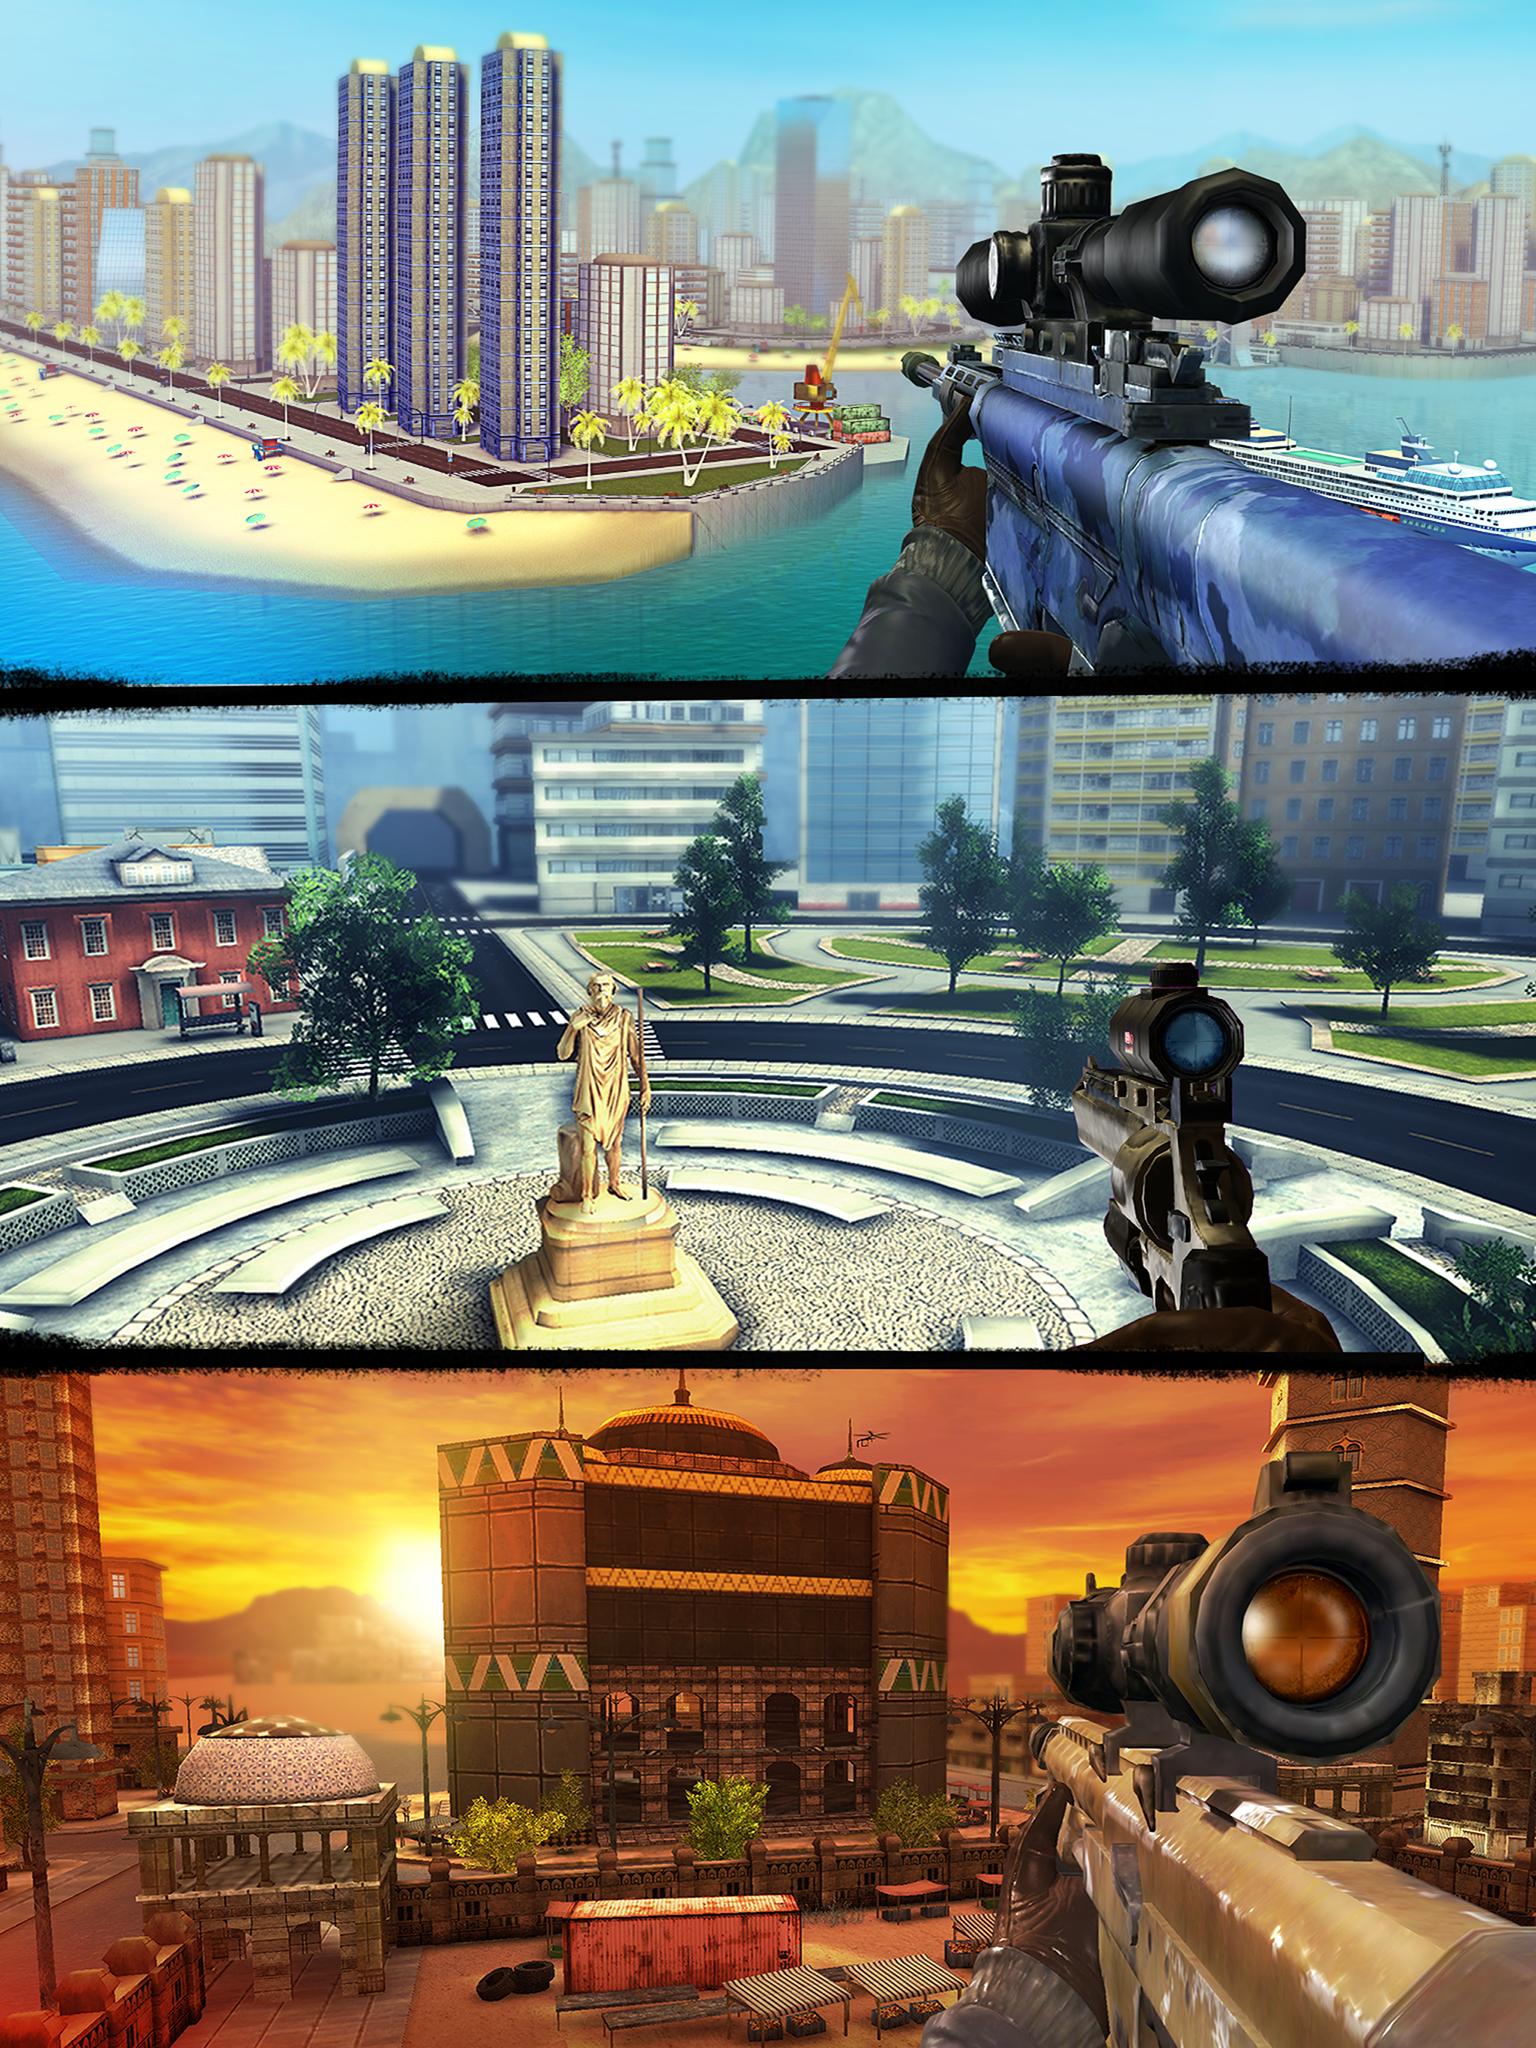 Sniper 3D Fun Free Online FPS Shooting Game 3.15.1 Screenshot 21